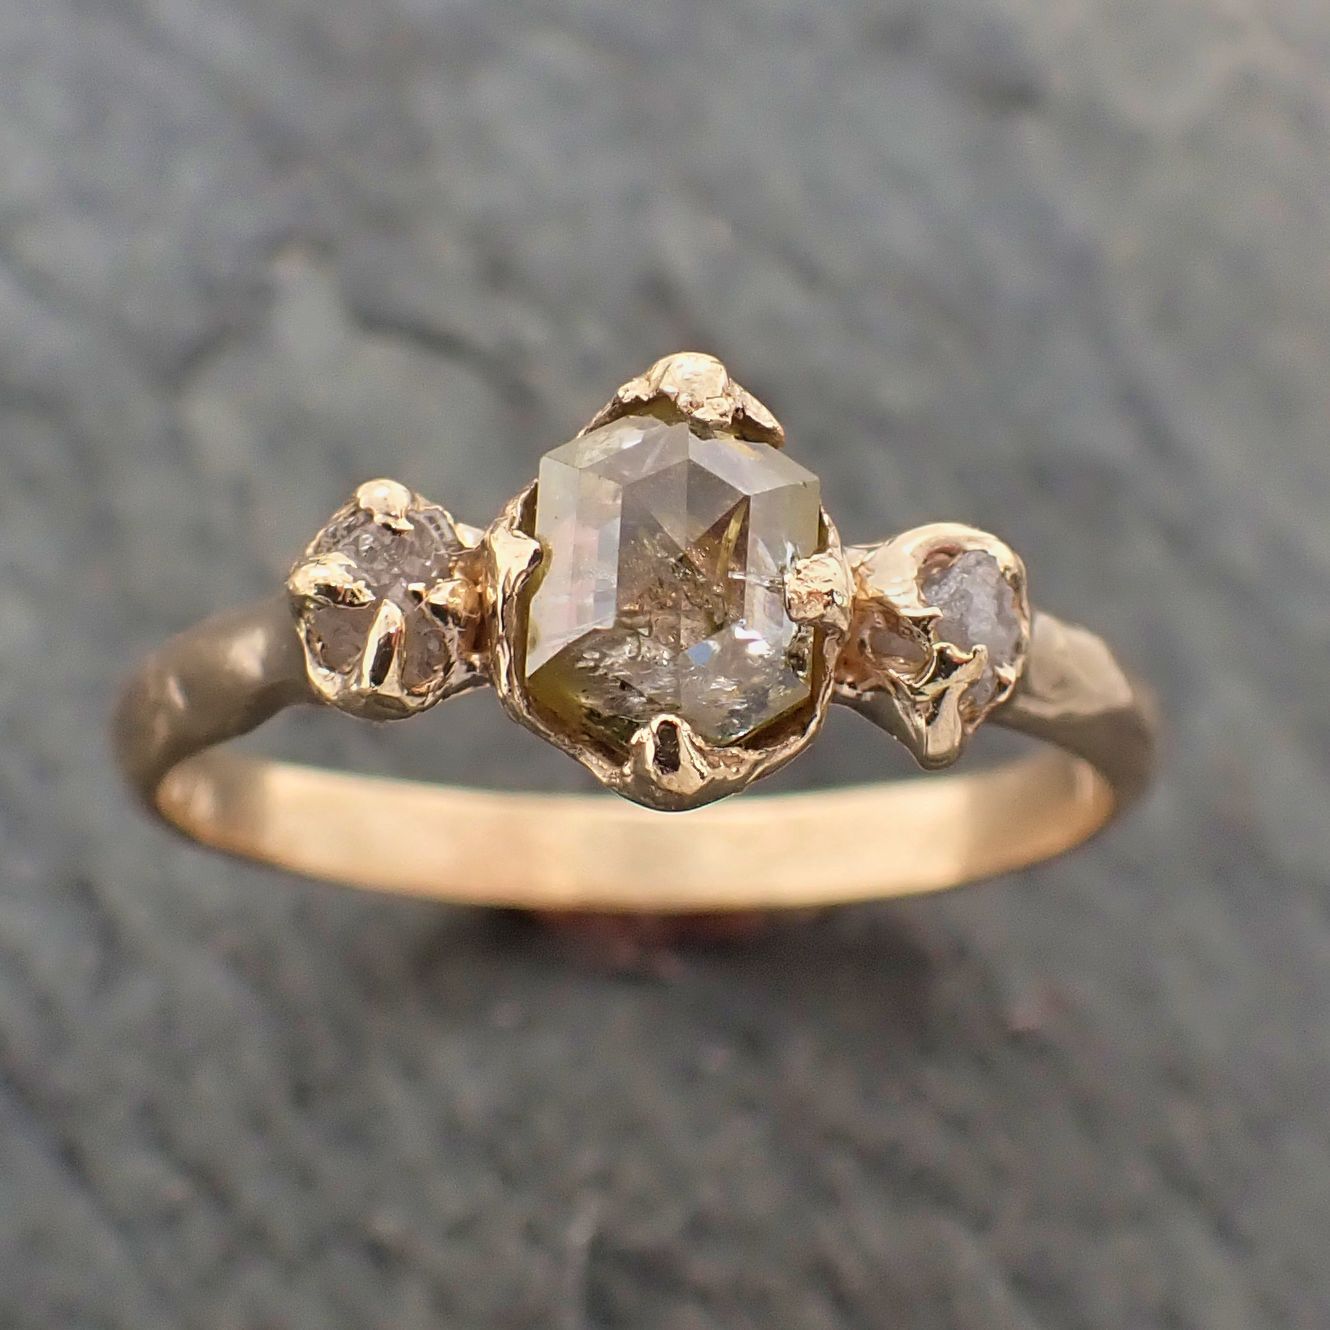 fancy cut white diamond engagement 18k yellow gold multi stone wedding ring stacking rough diamond ring byangeline 2264 Alternative Engagement